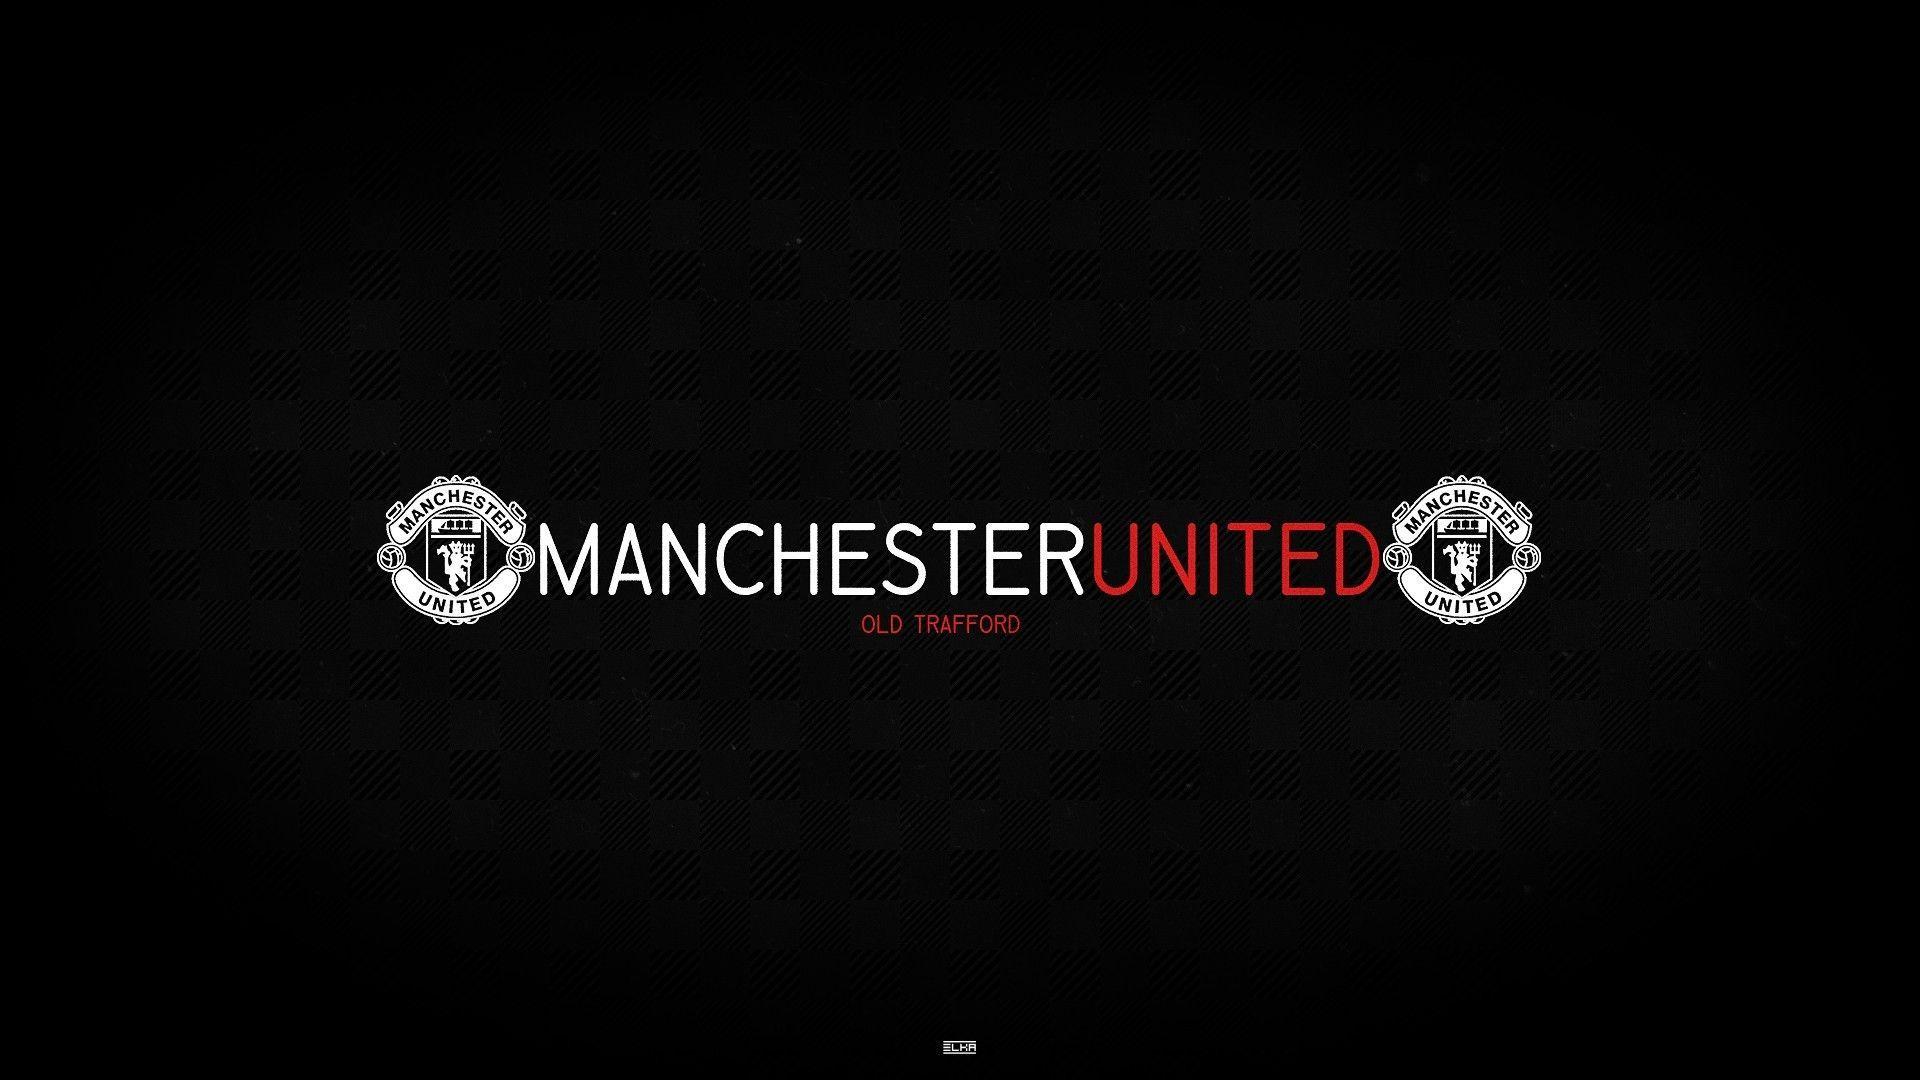 Black, Background, Manchester, United, Logo, Full, Top, Hd, Wallappers, Free, D. Manchester united wallpaper, Manchester united logo, Manchester united